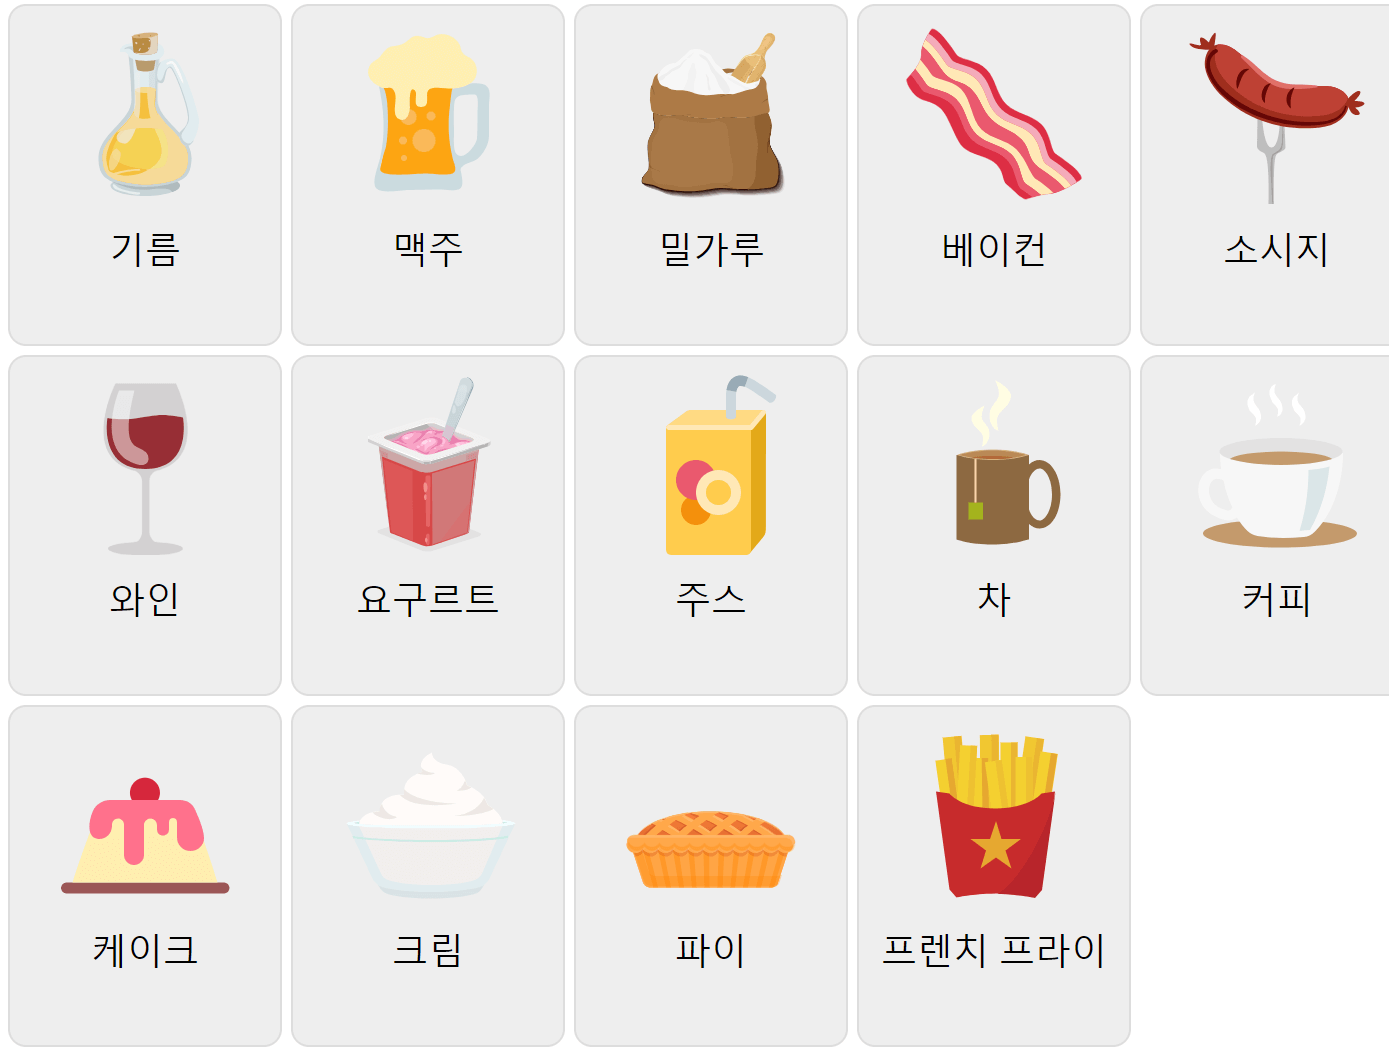 Еда на корейском языке 2